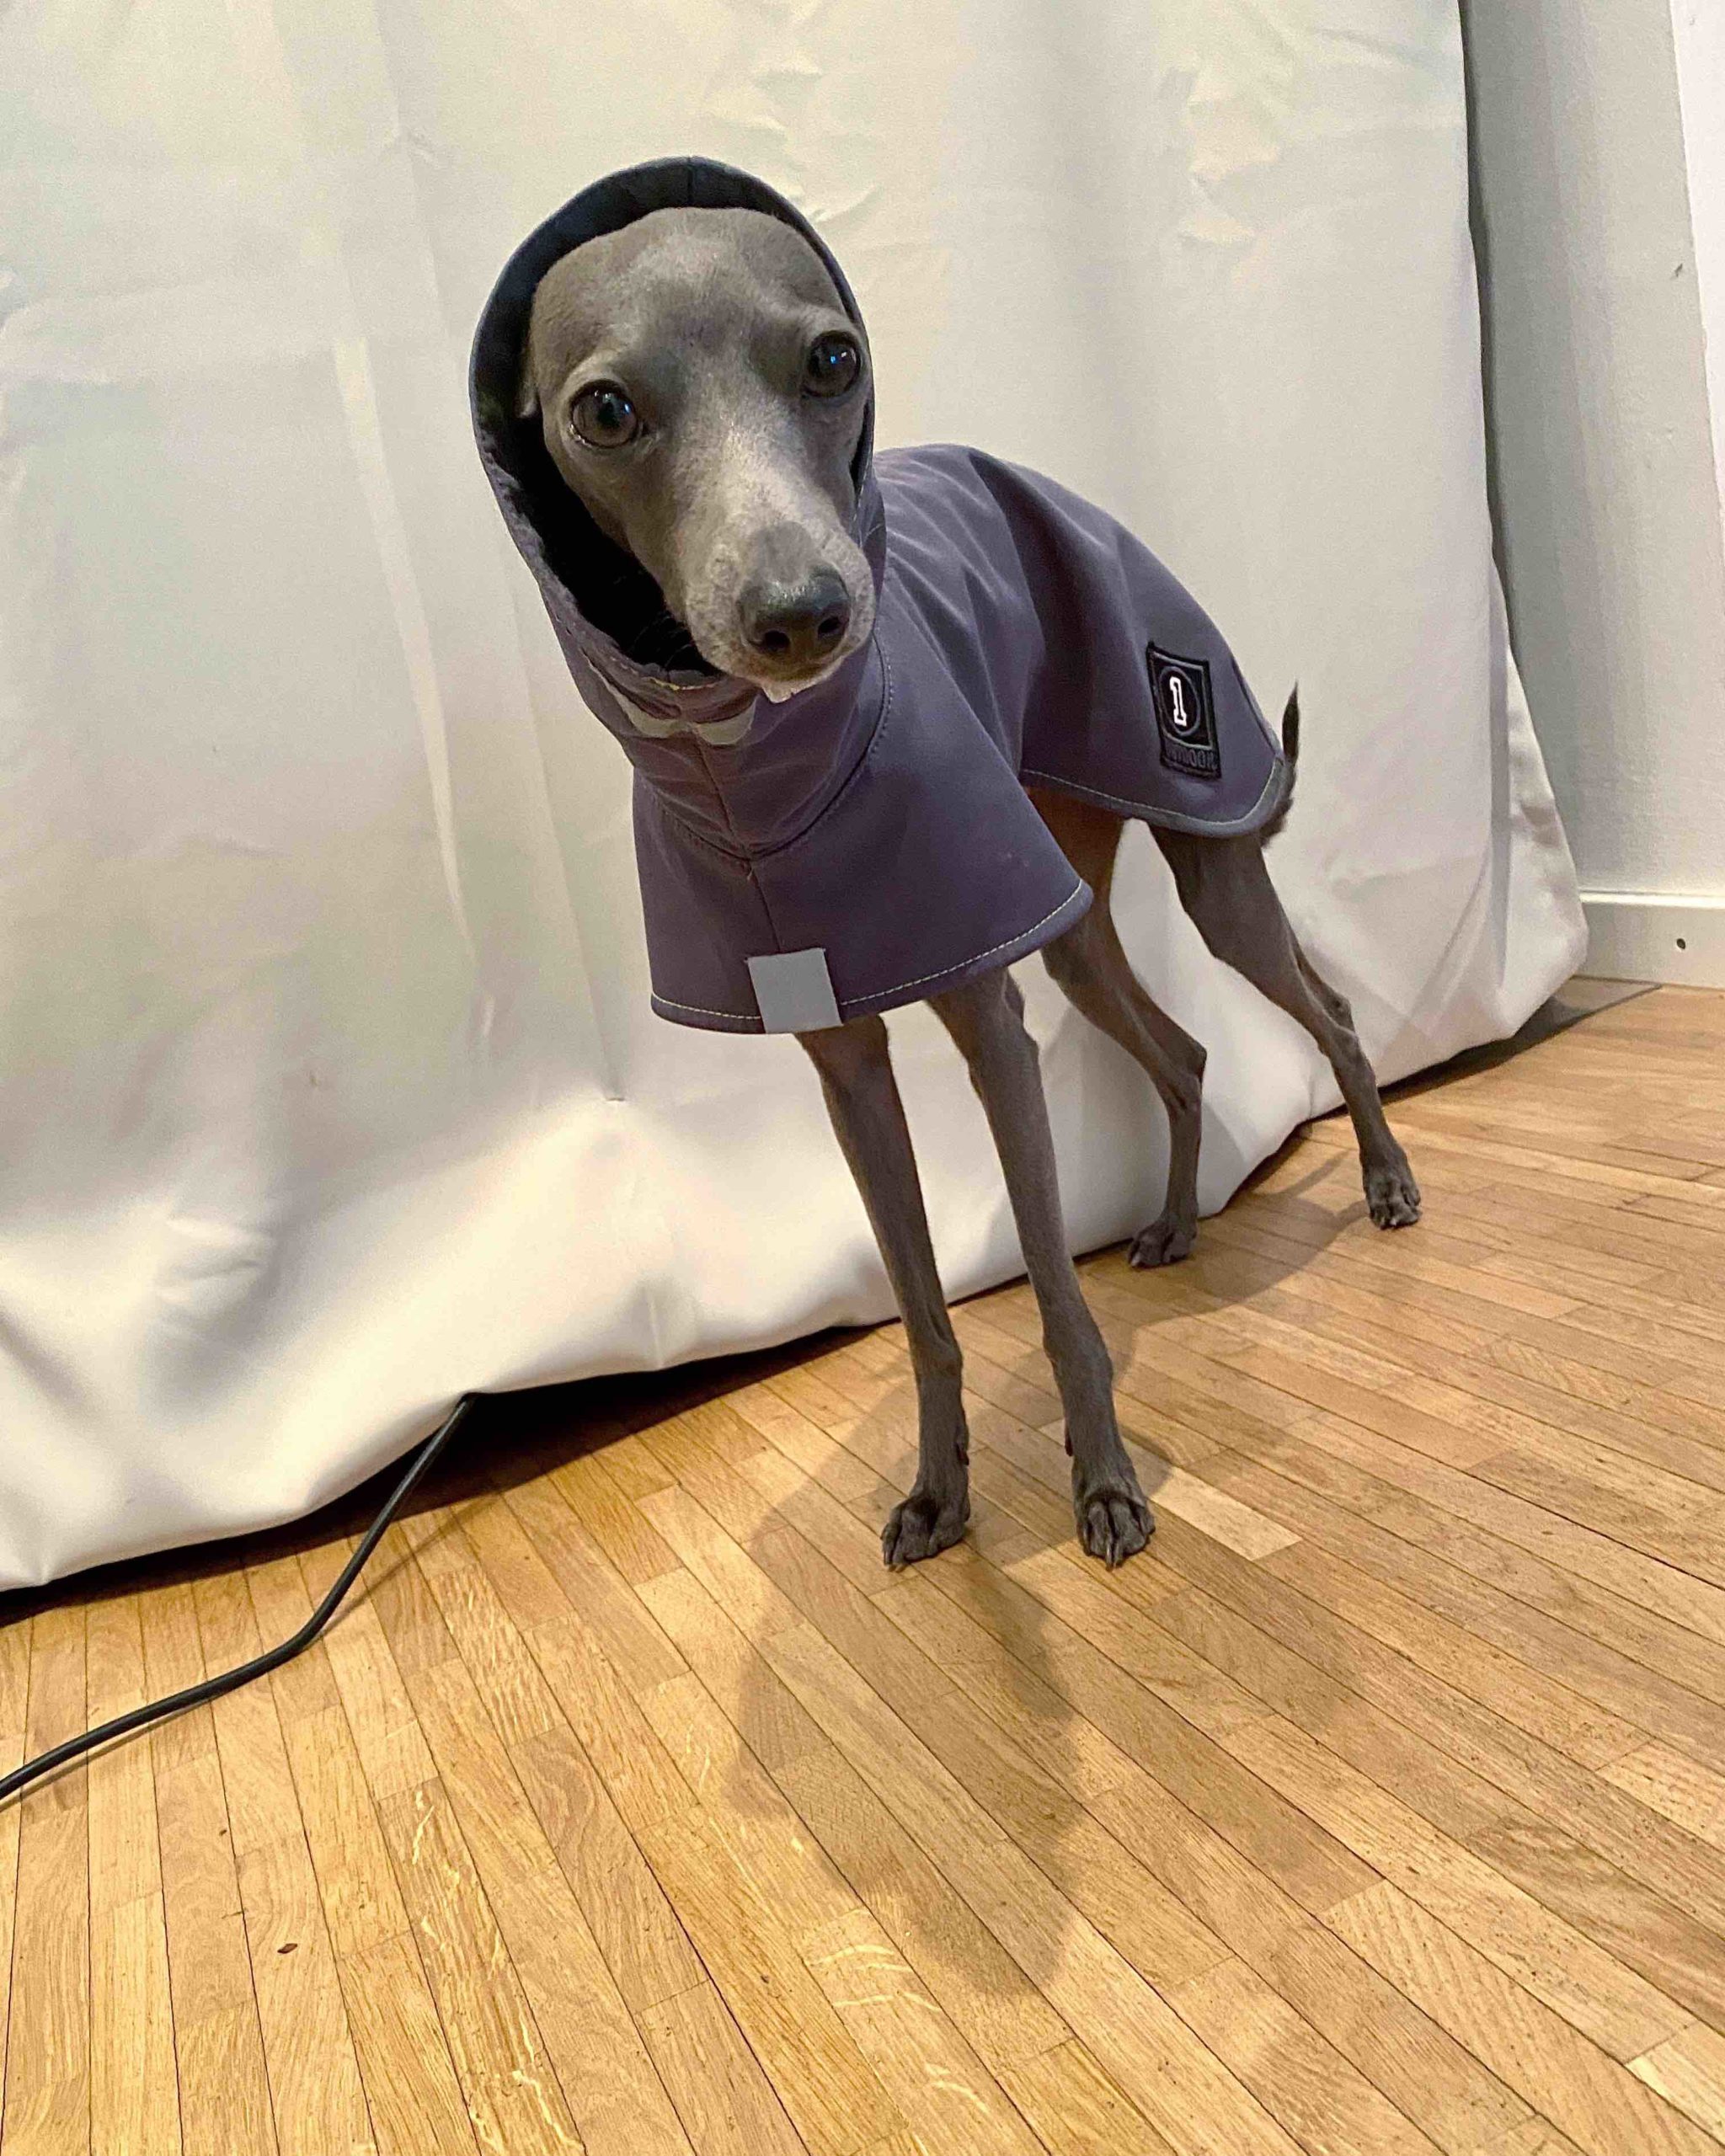 do italian greyhounds need clothes